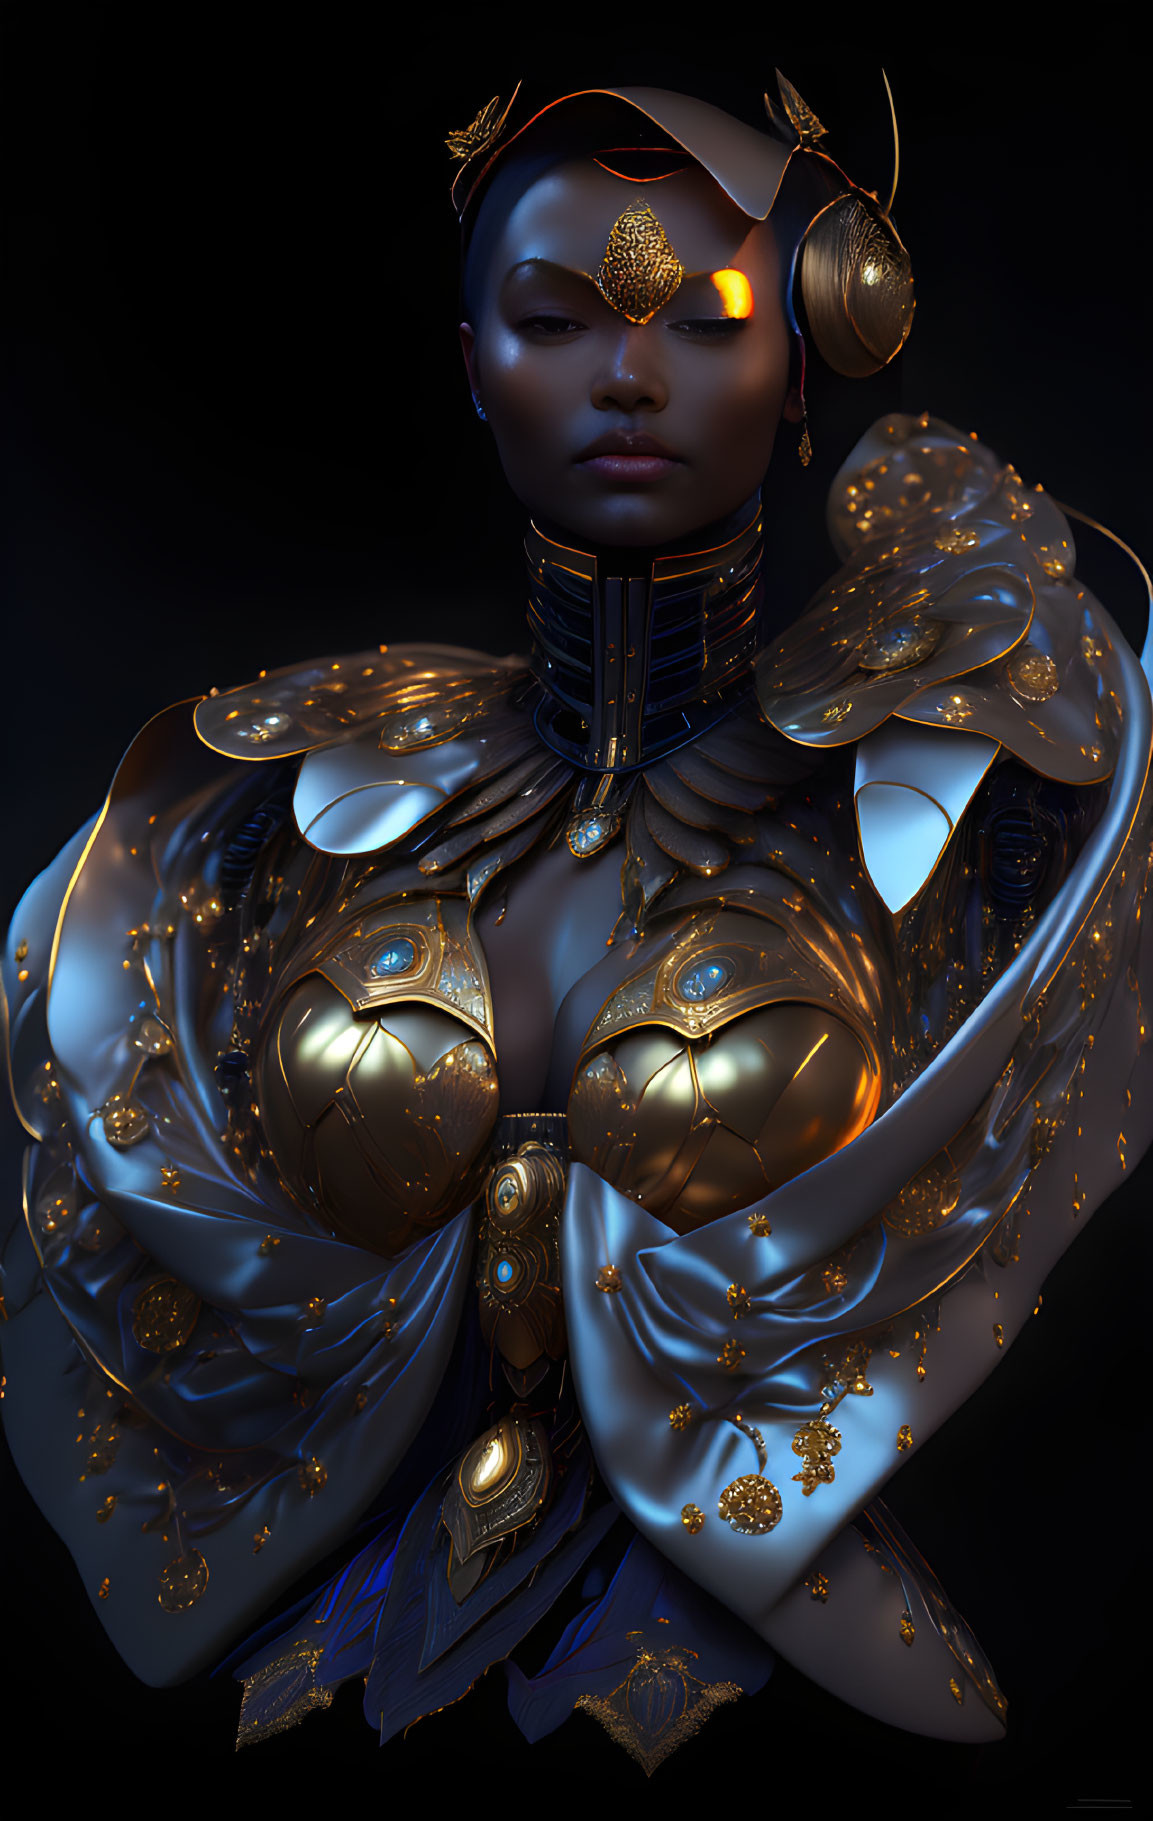 Futuristic digital artwork of woman in golden armor against dark backdrop